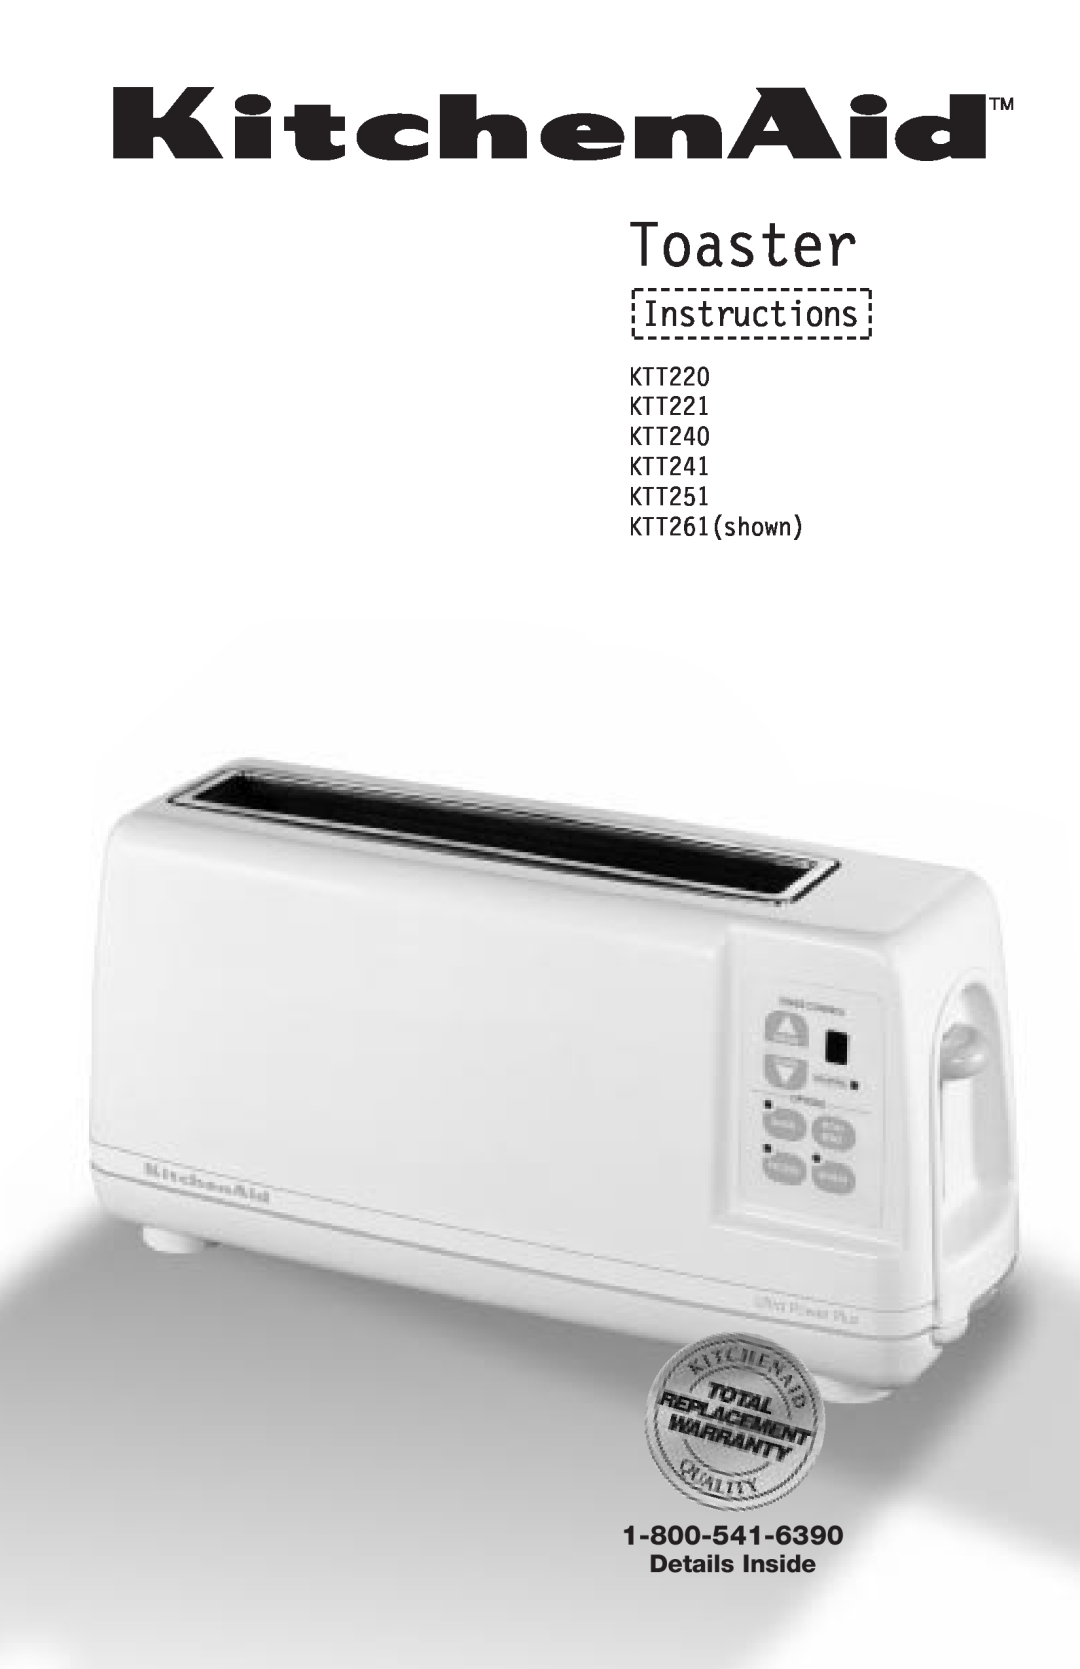 KitchenAid KTT220 manual Toaster, Instructions, Details Inside 